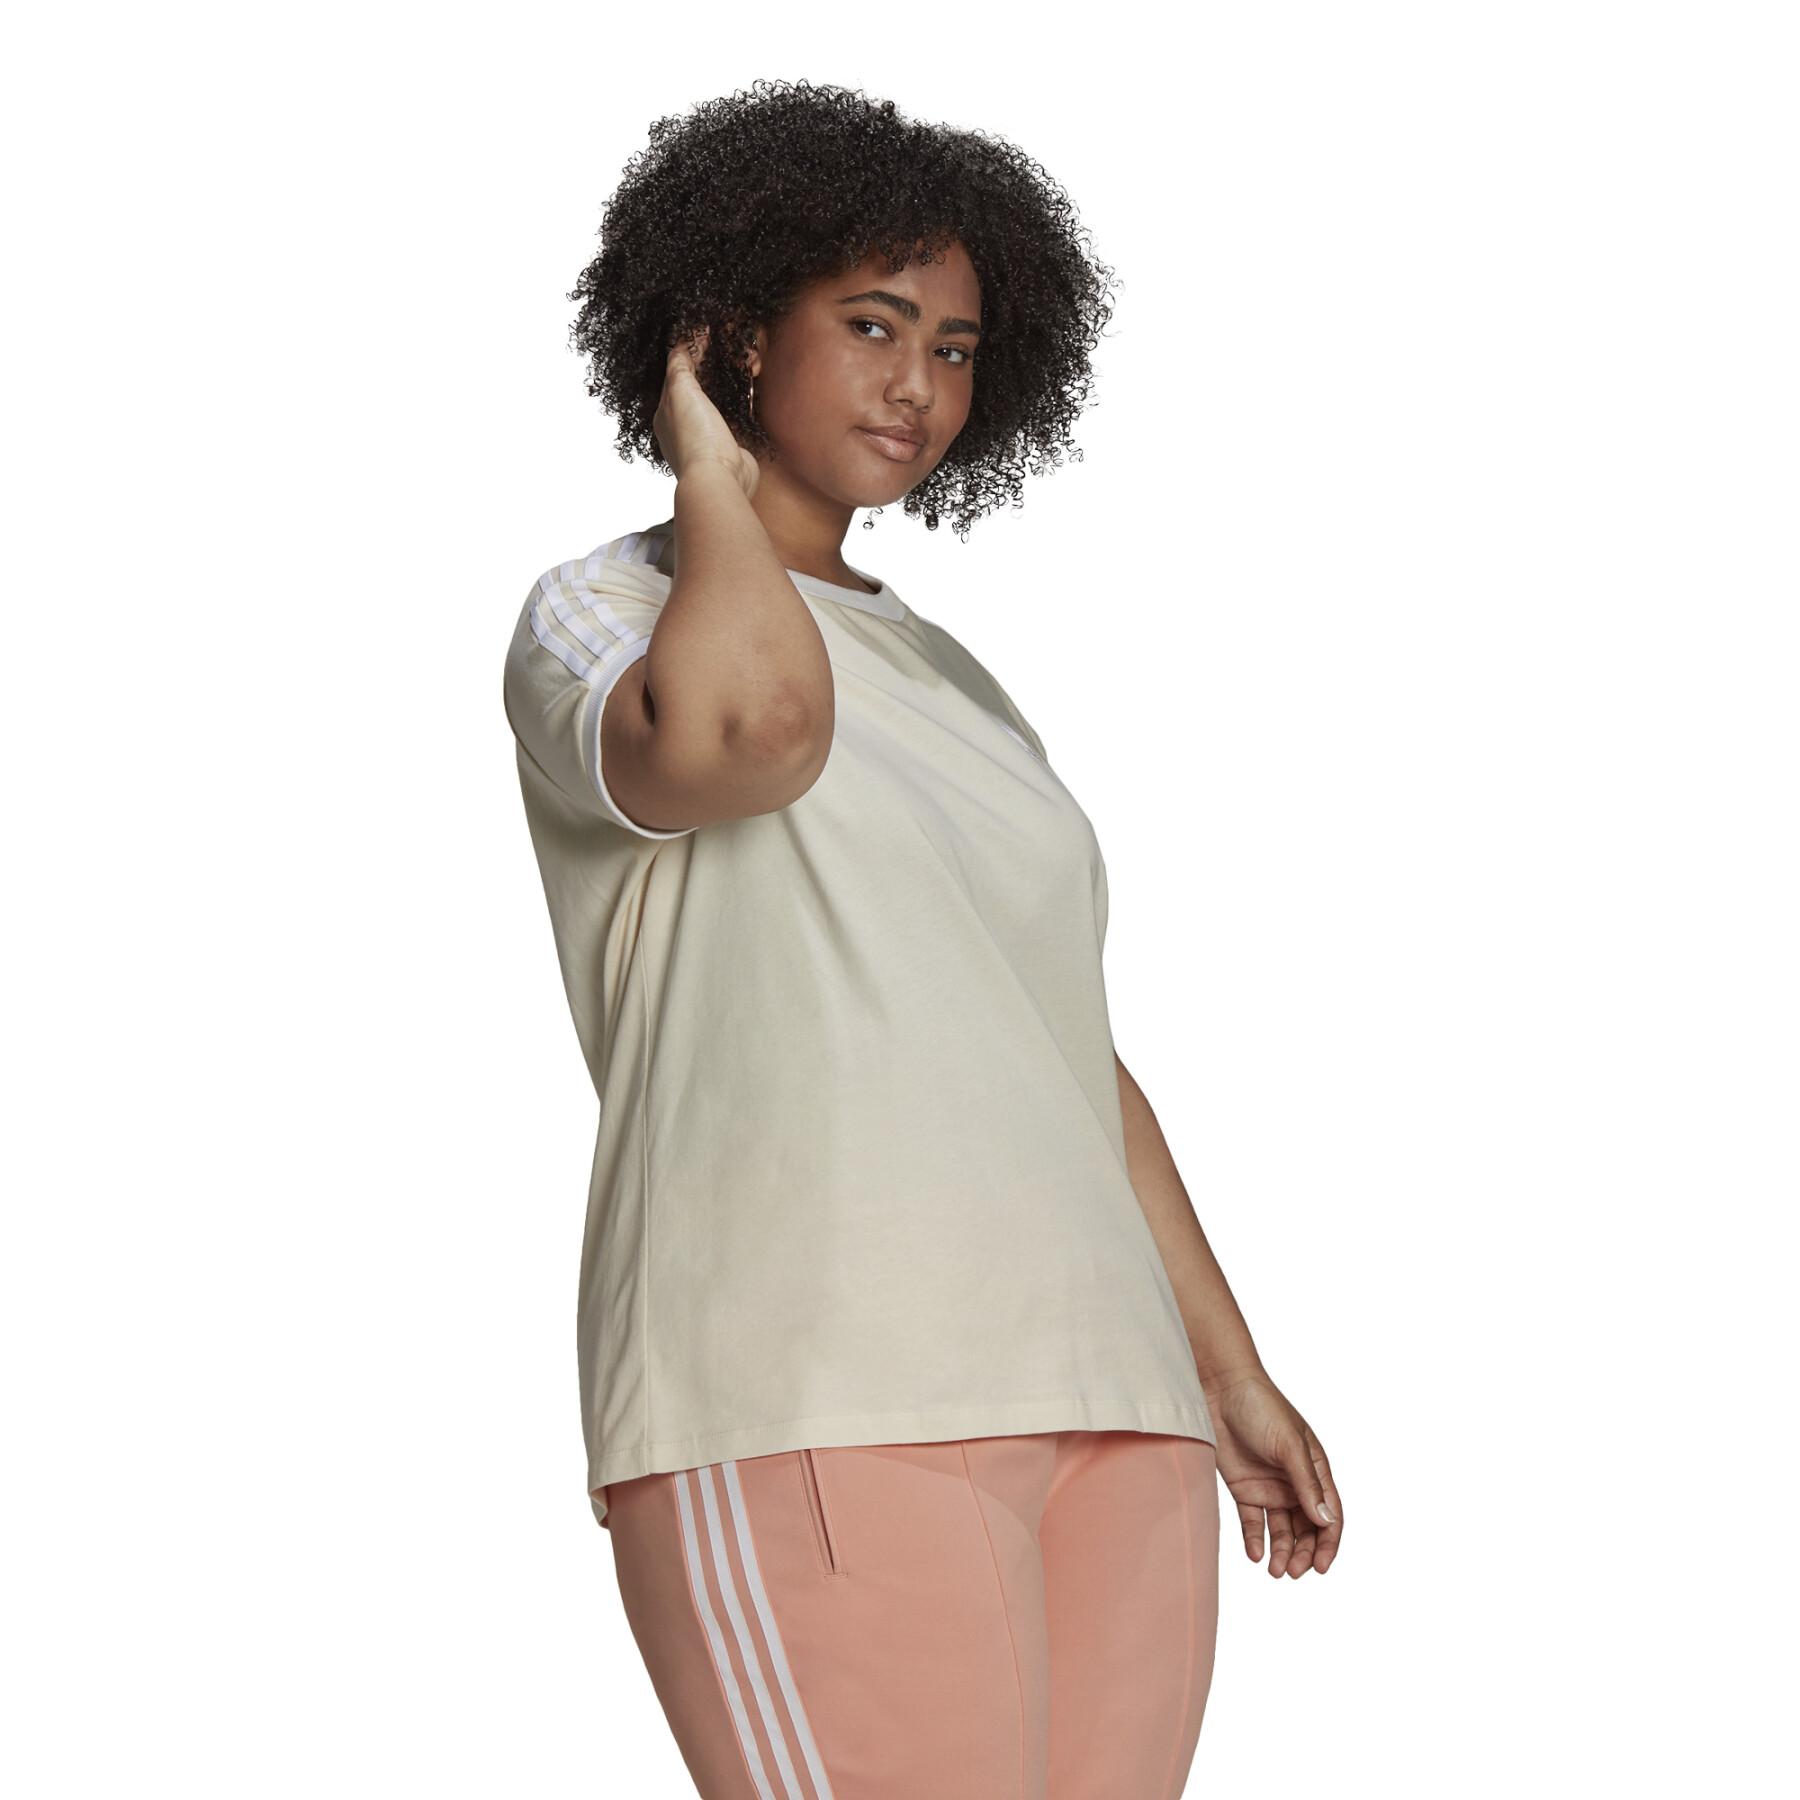 Camiseta de mujer adidas Originals Adicolor s 3-Stripes (Grandes tailles)